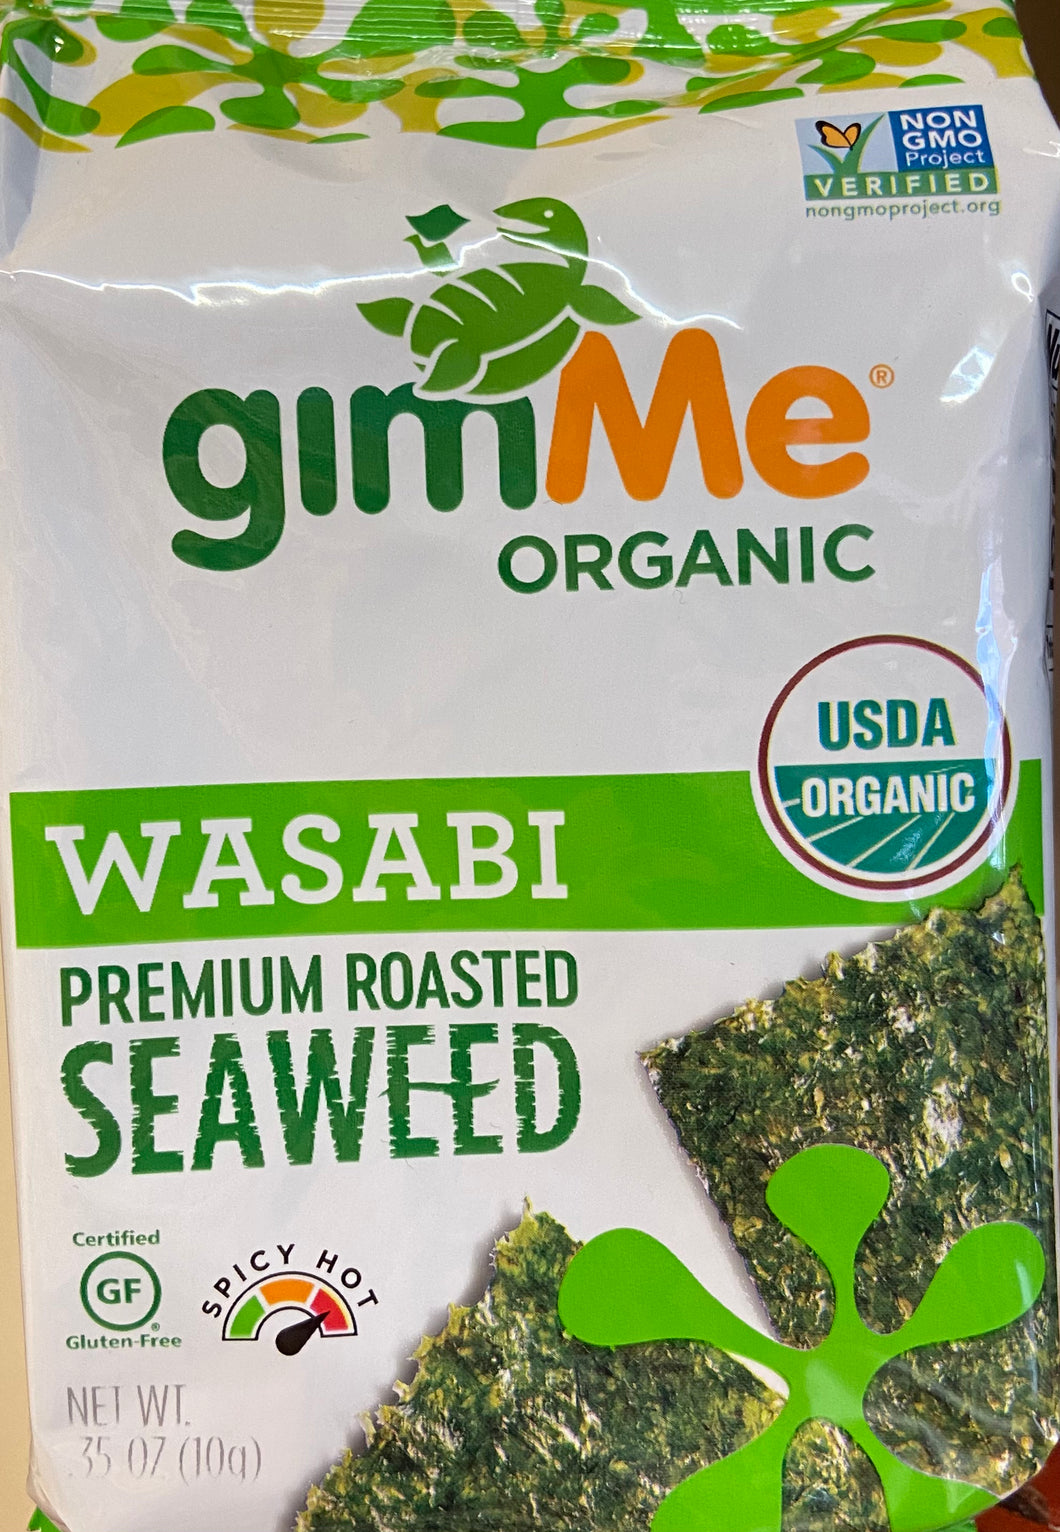 Roasted Seaweed Snack with Wasabi, Organic, gimMee